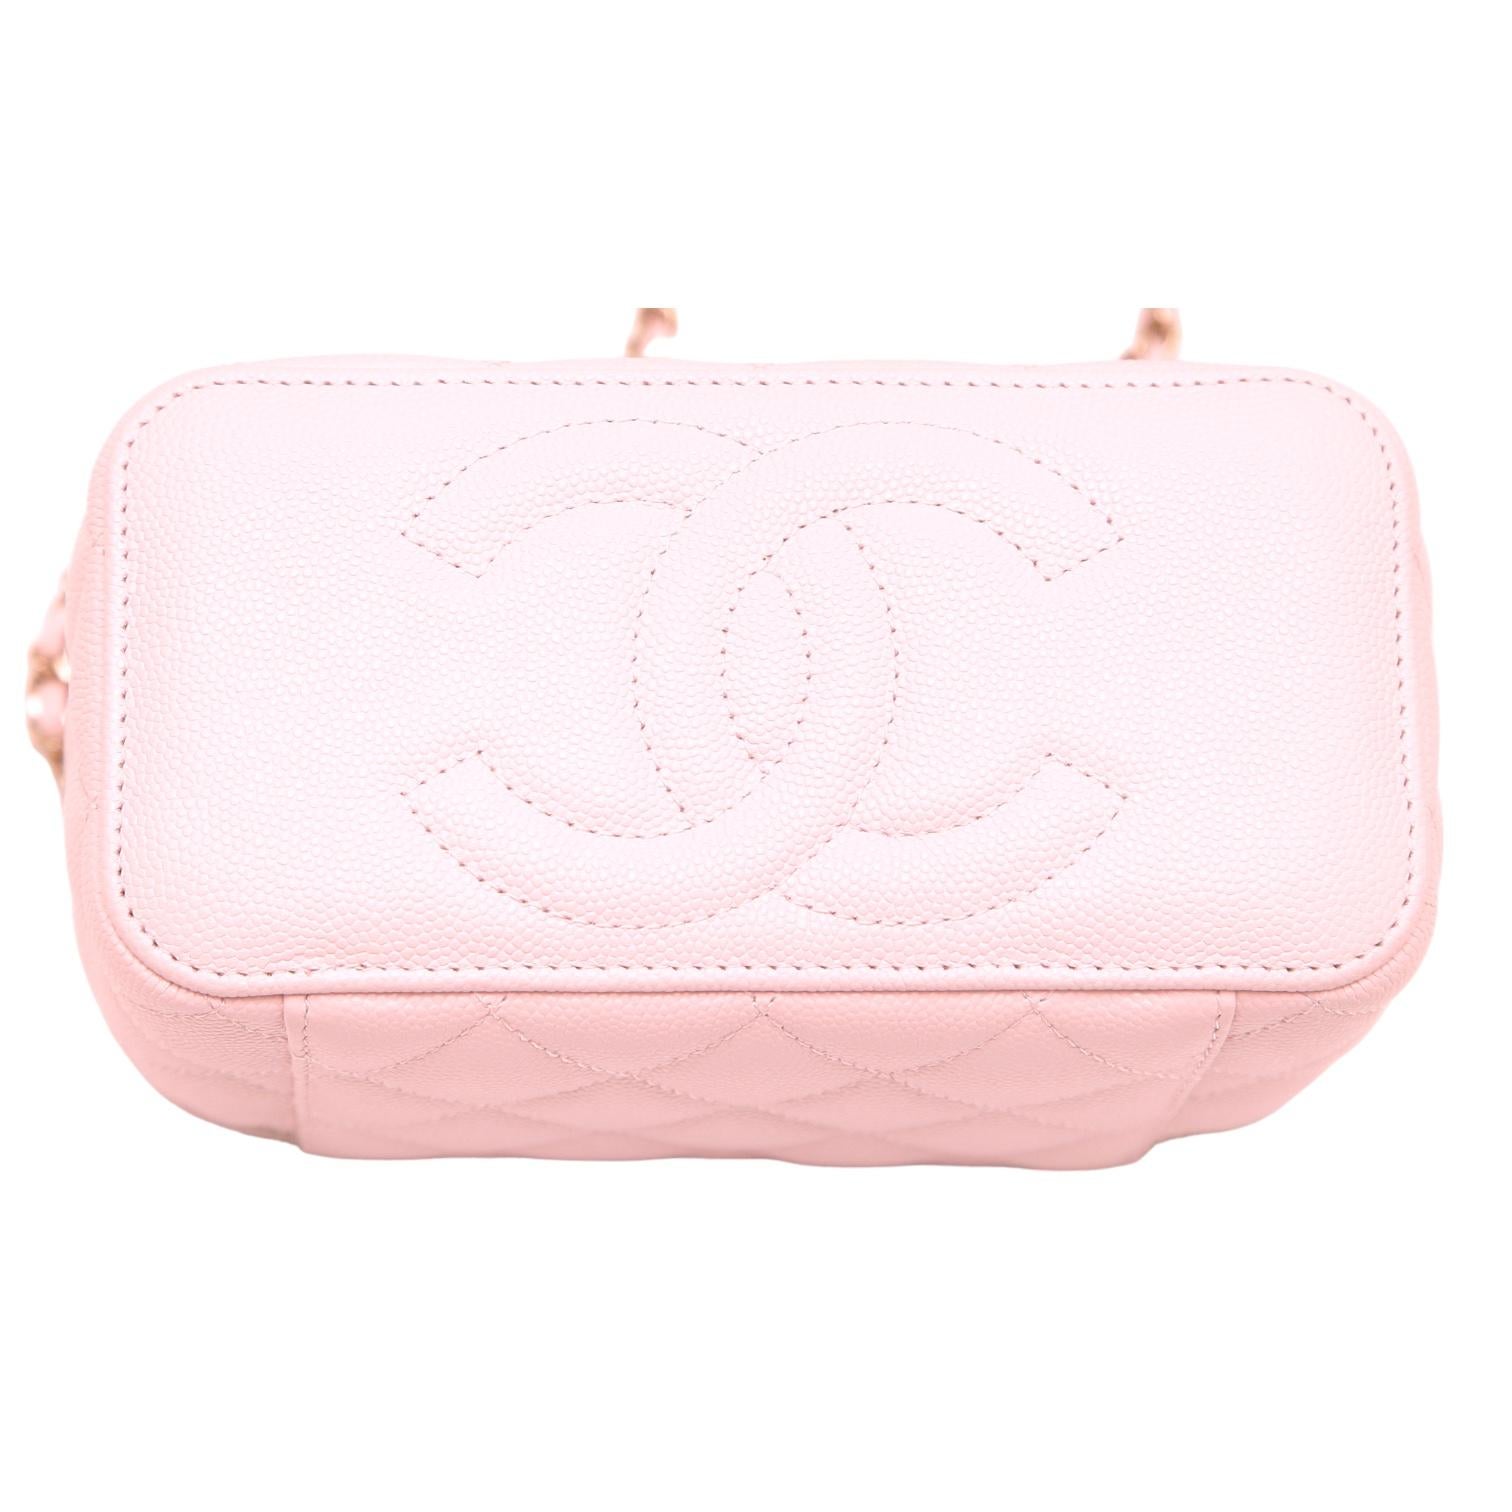  CHANEL Pink Caviar Leather Vanity Bag Case Crossbody Gold HW Light 22S - Video  2